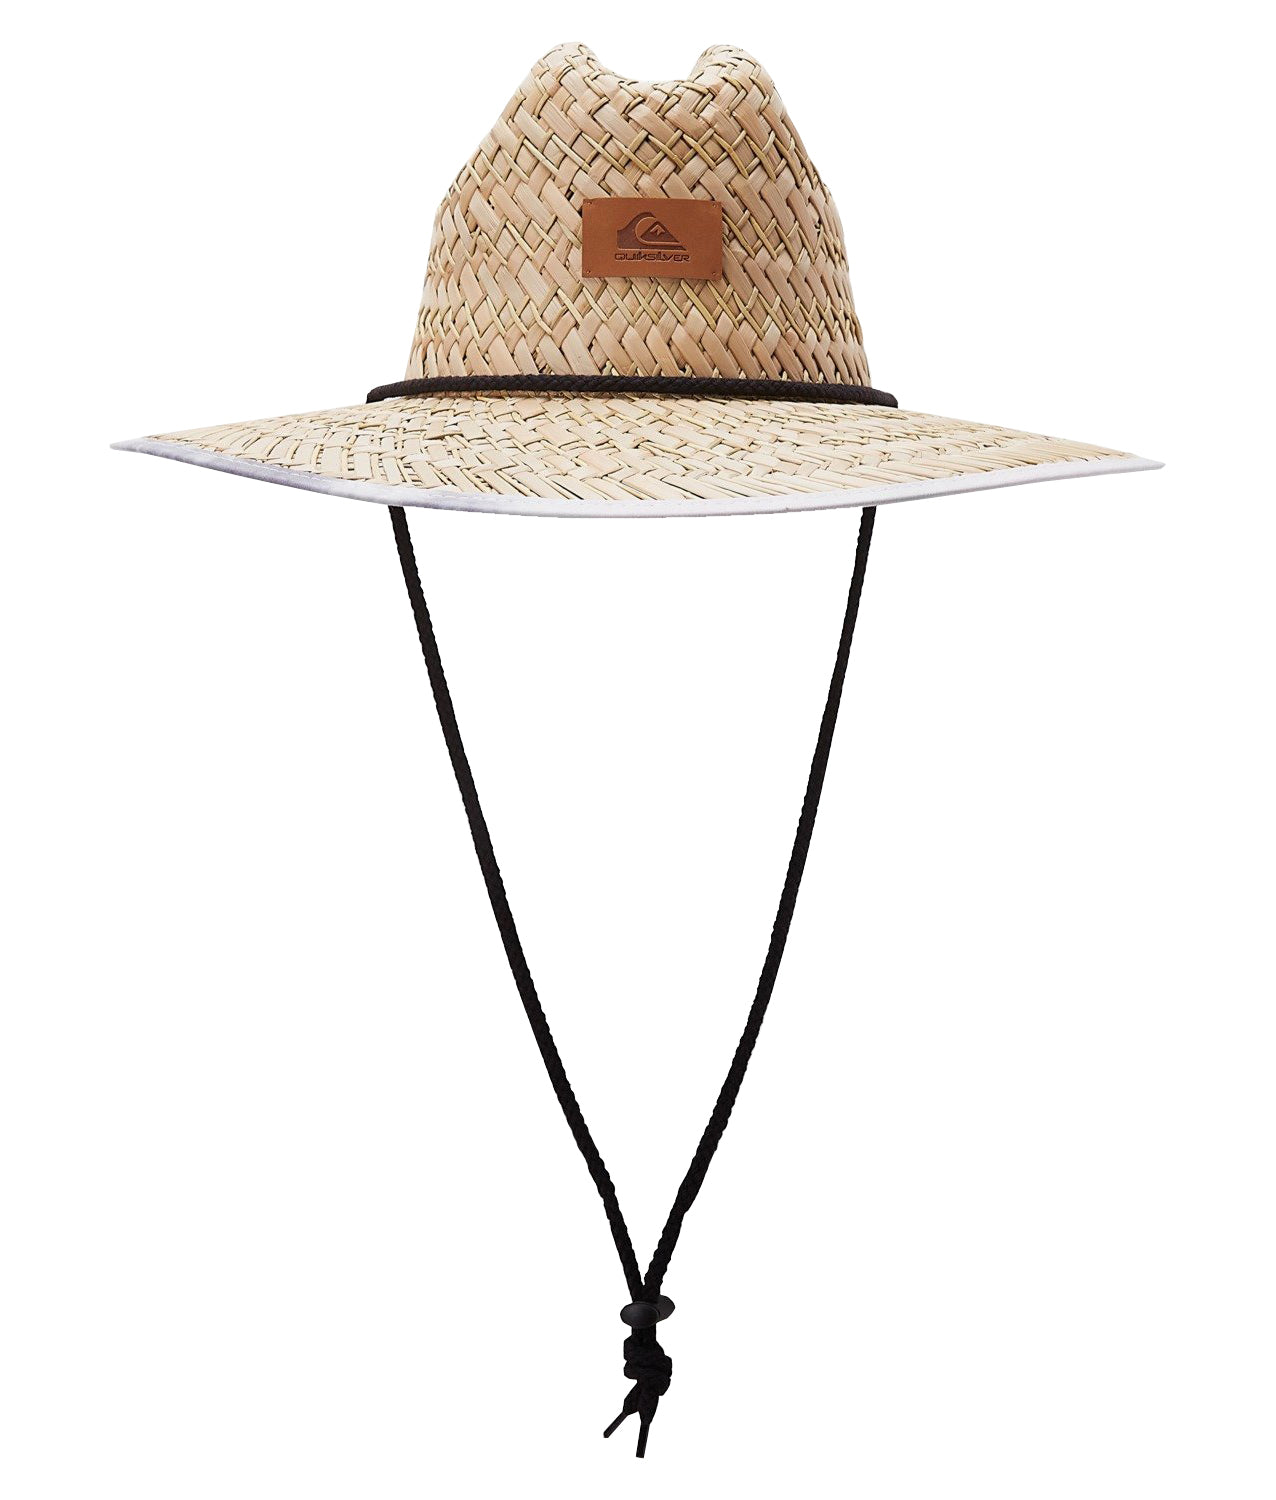 Quiksilver Outsider Straw Lifeguard Hat KZE6 XXL